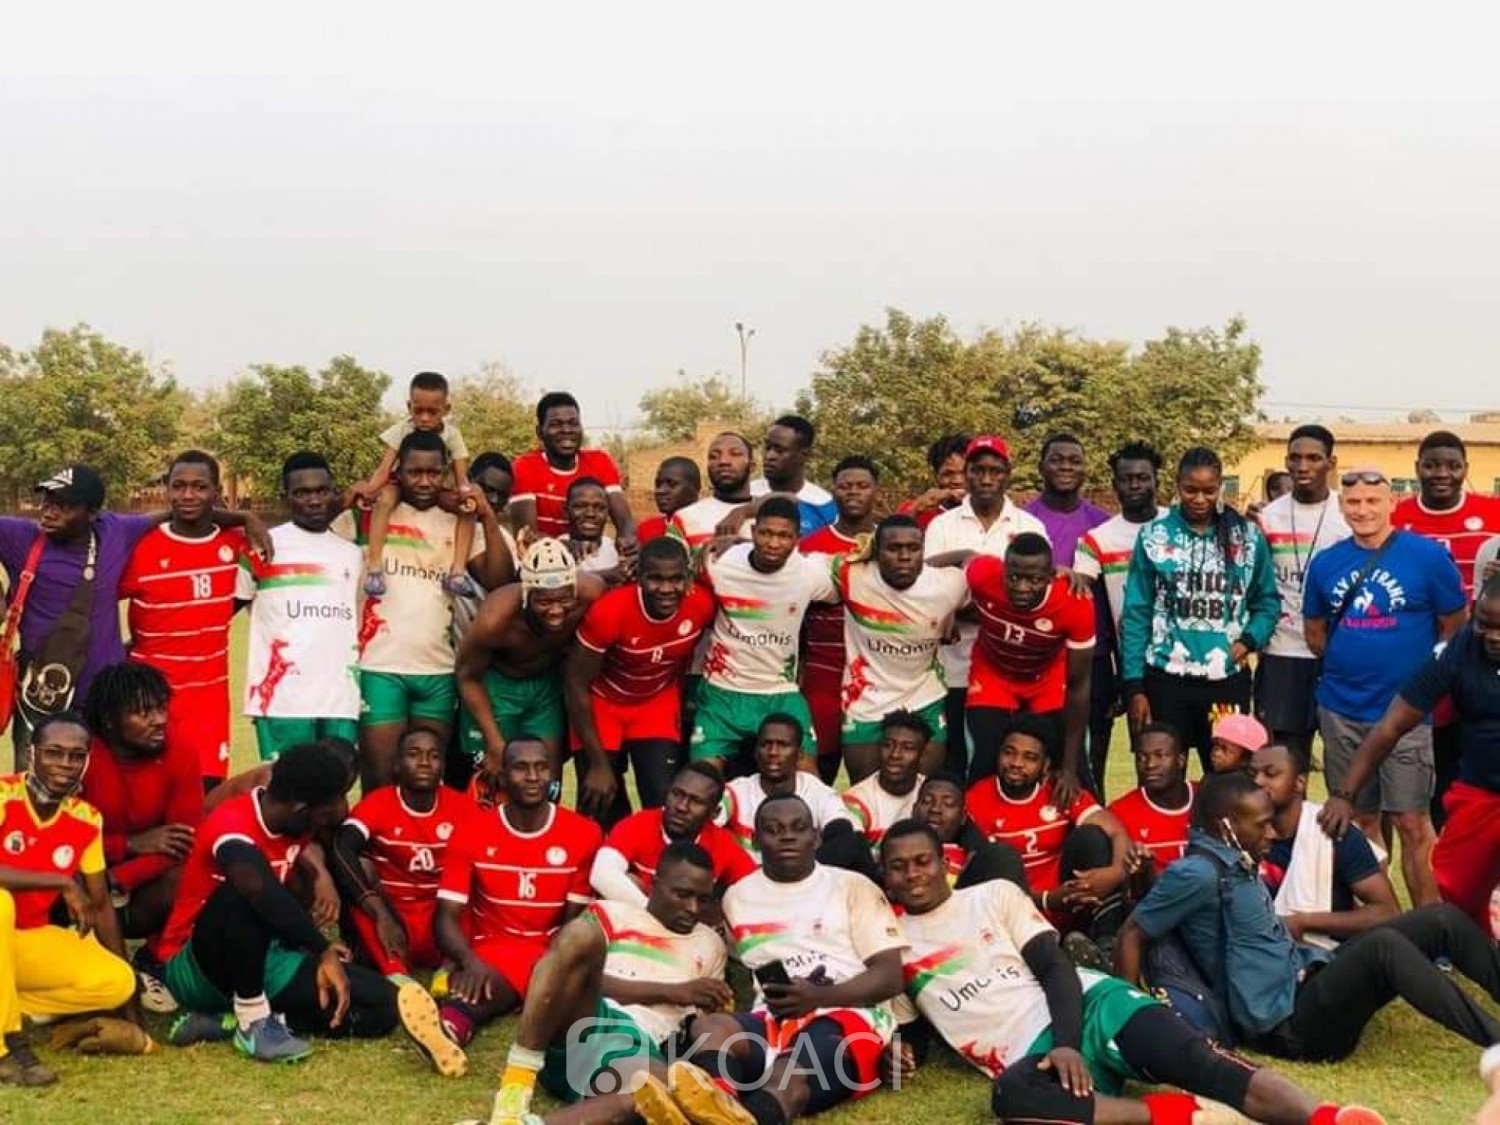 Burkina Faso : Rugby Africa cup, le tournoi de repêchage prévu à Ouagadougou du 5 au 13 juin